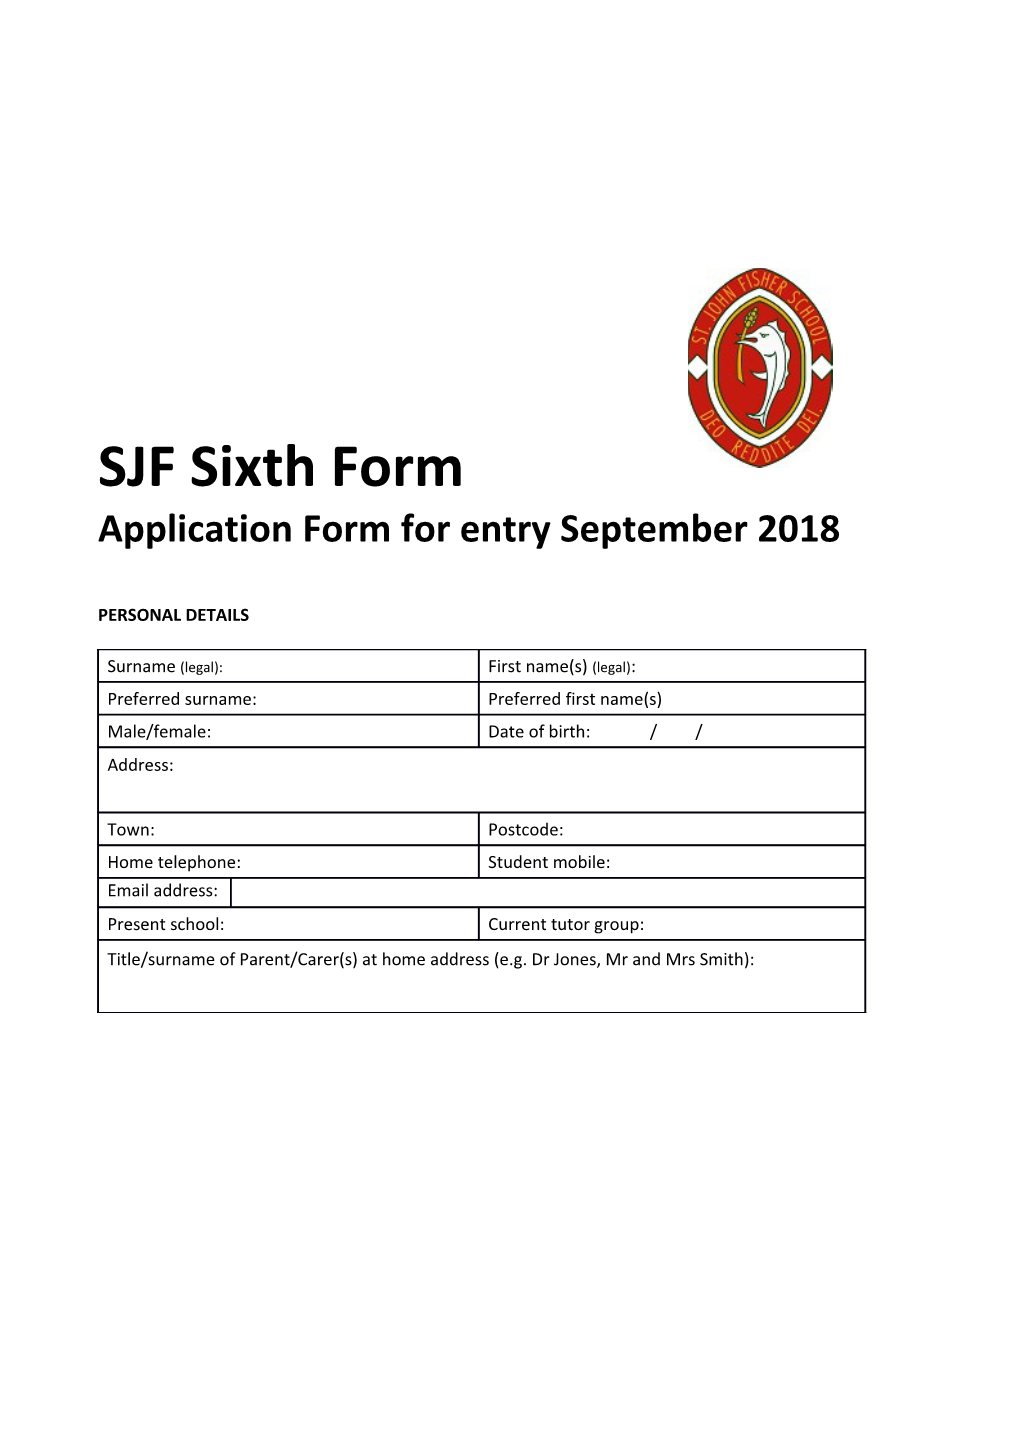 Application Form for Entry September 2018